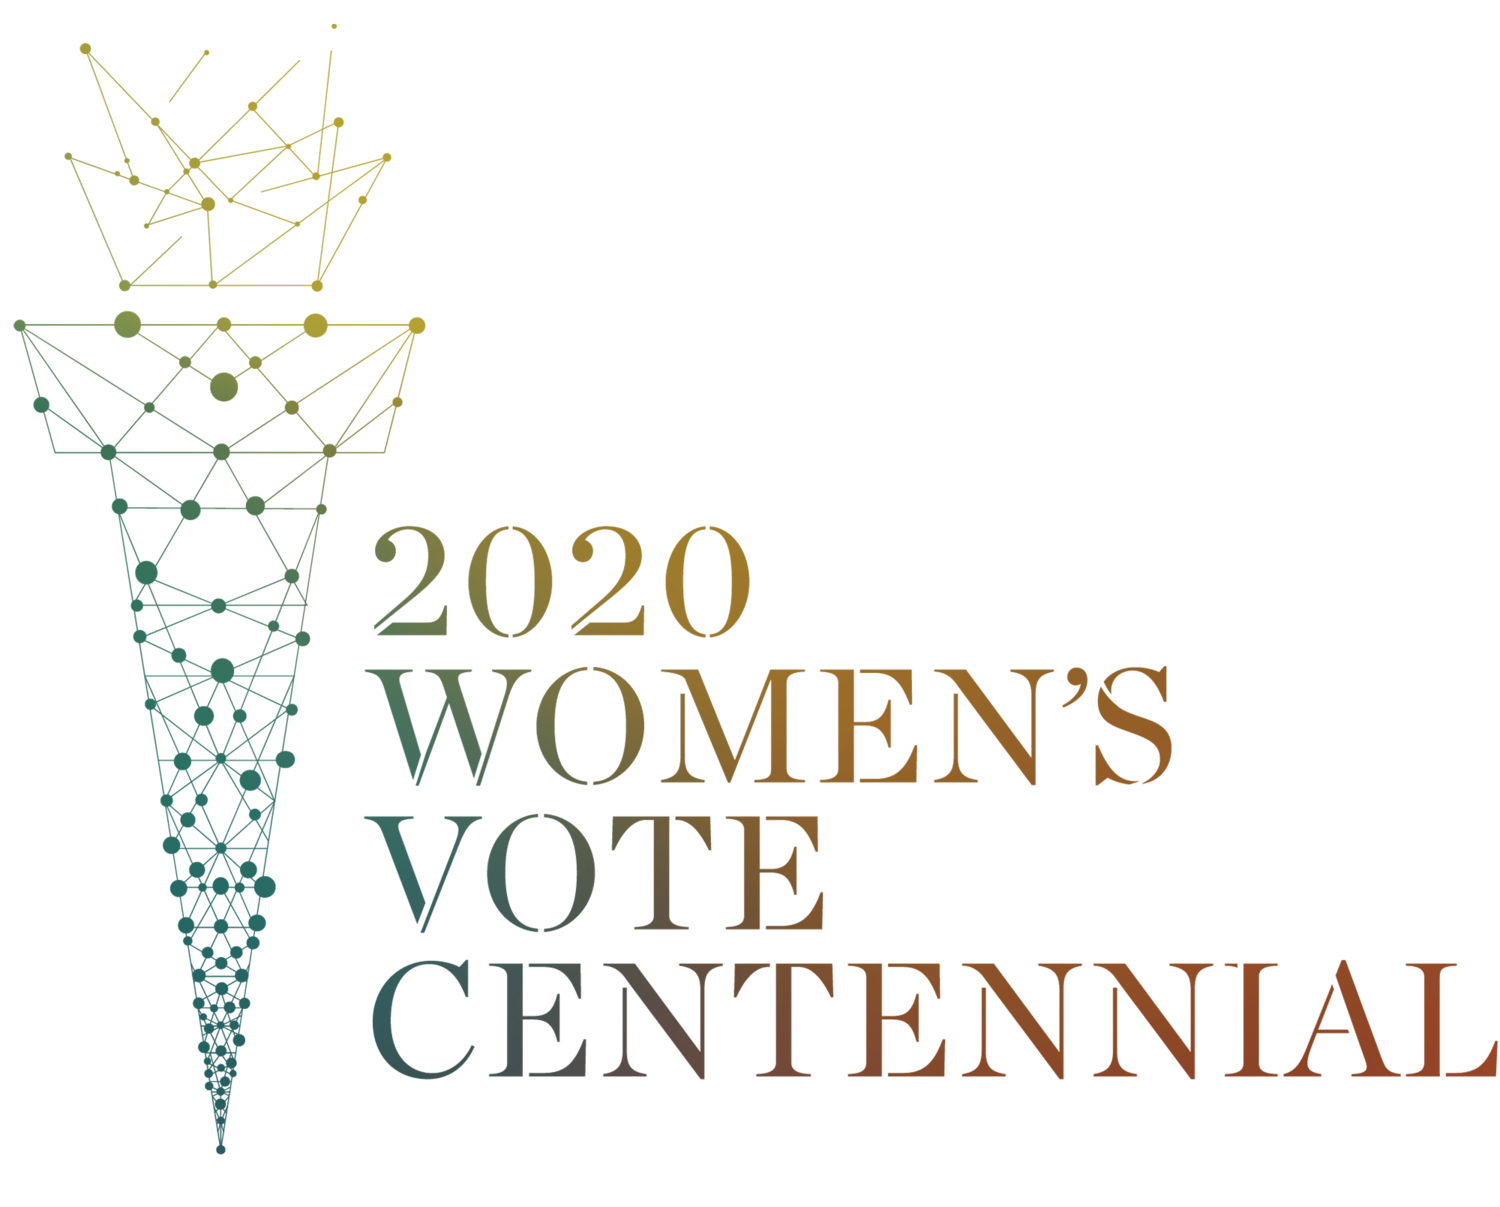 The 2020 Women’s Vote Centennial Initiative